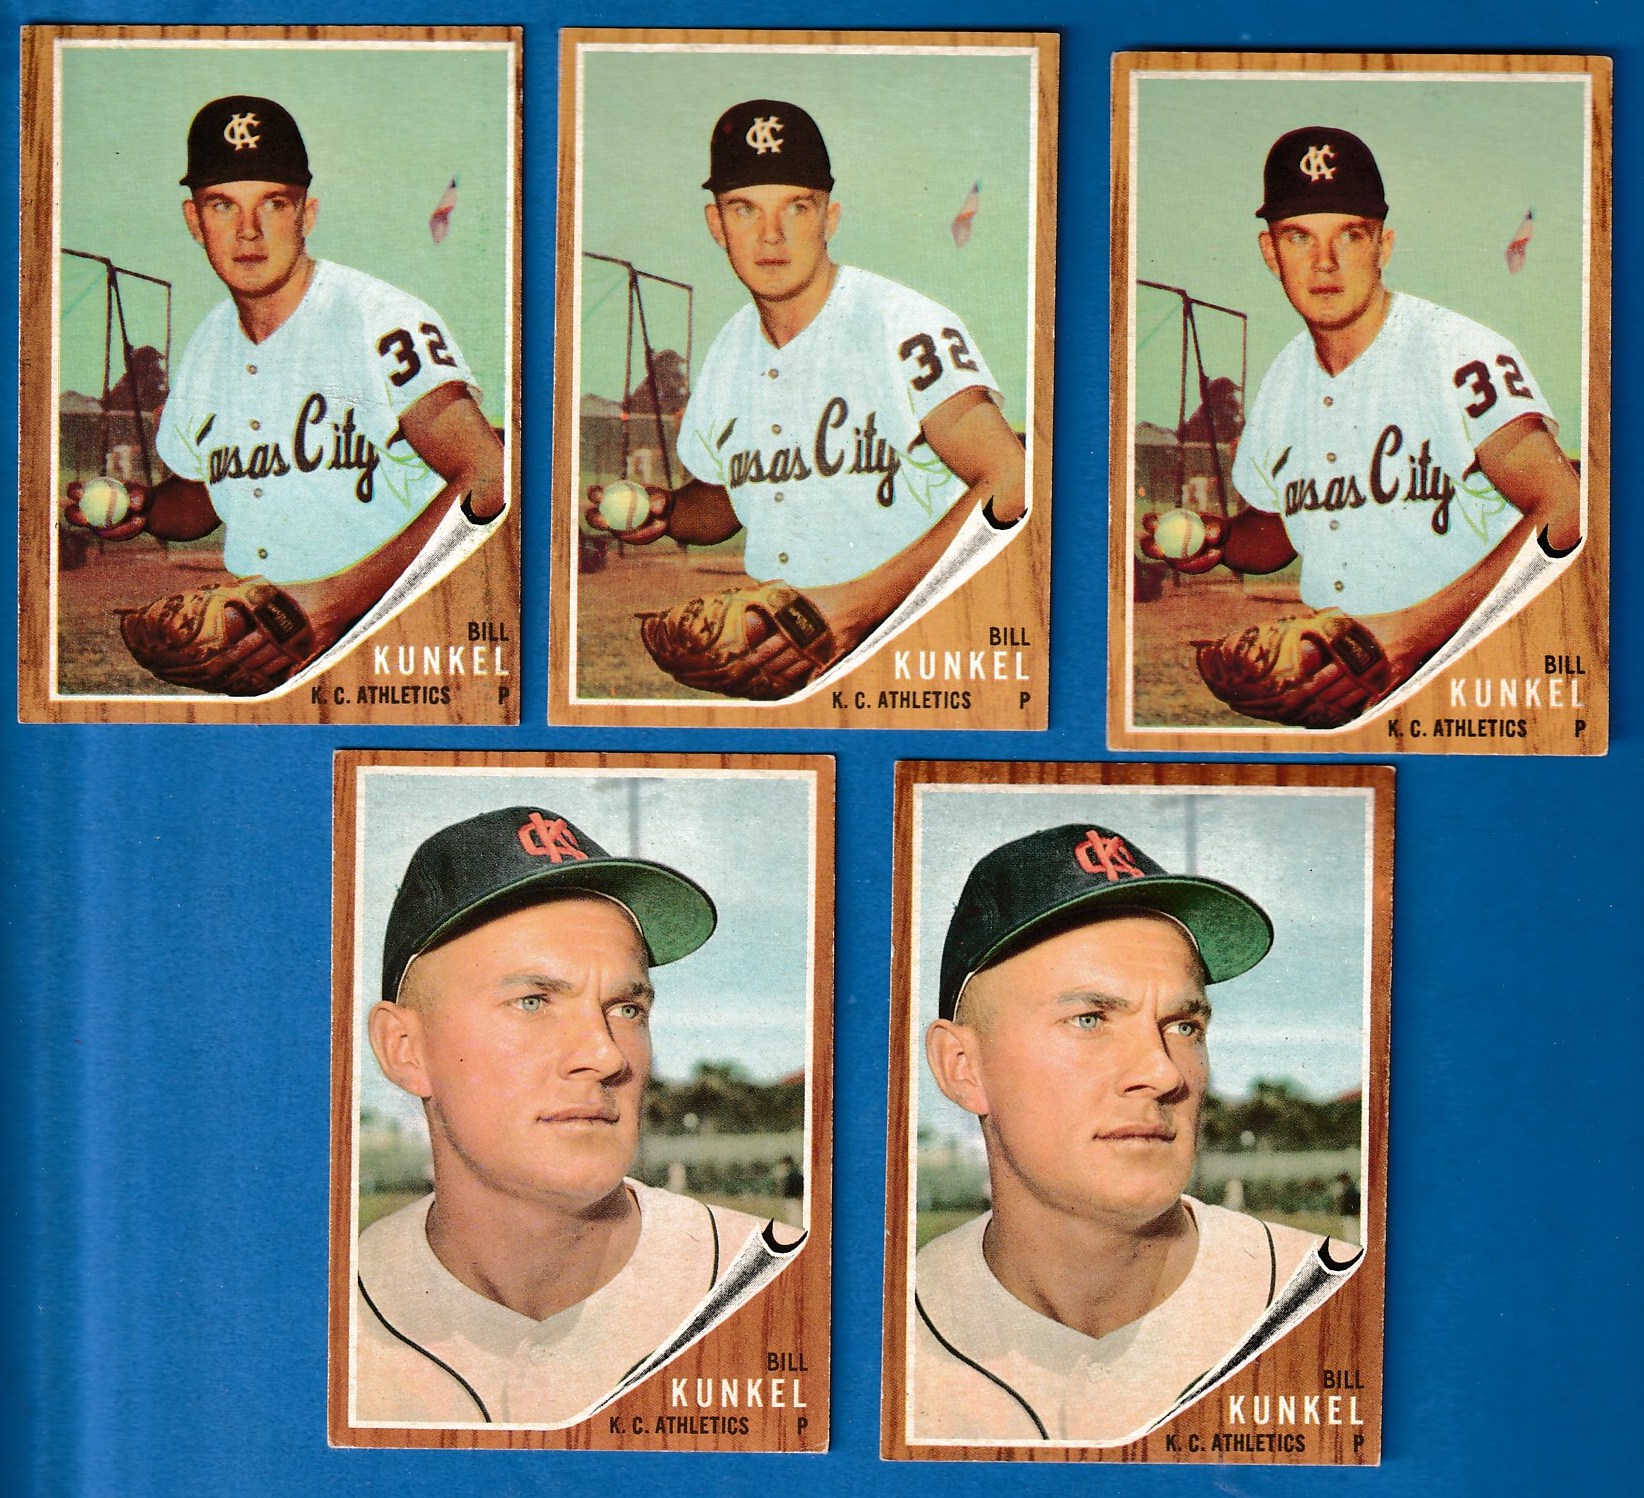 1962 Topps #147B Bill Kunkel [VAR:With Ball/Green Tint] (K.C. A's) Baseball cards value